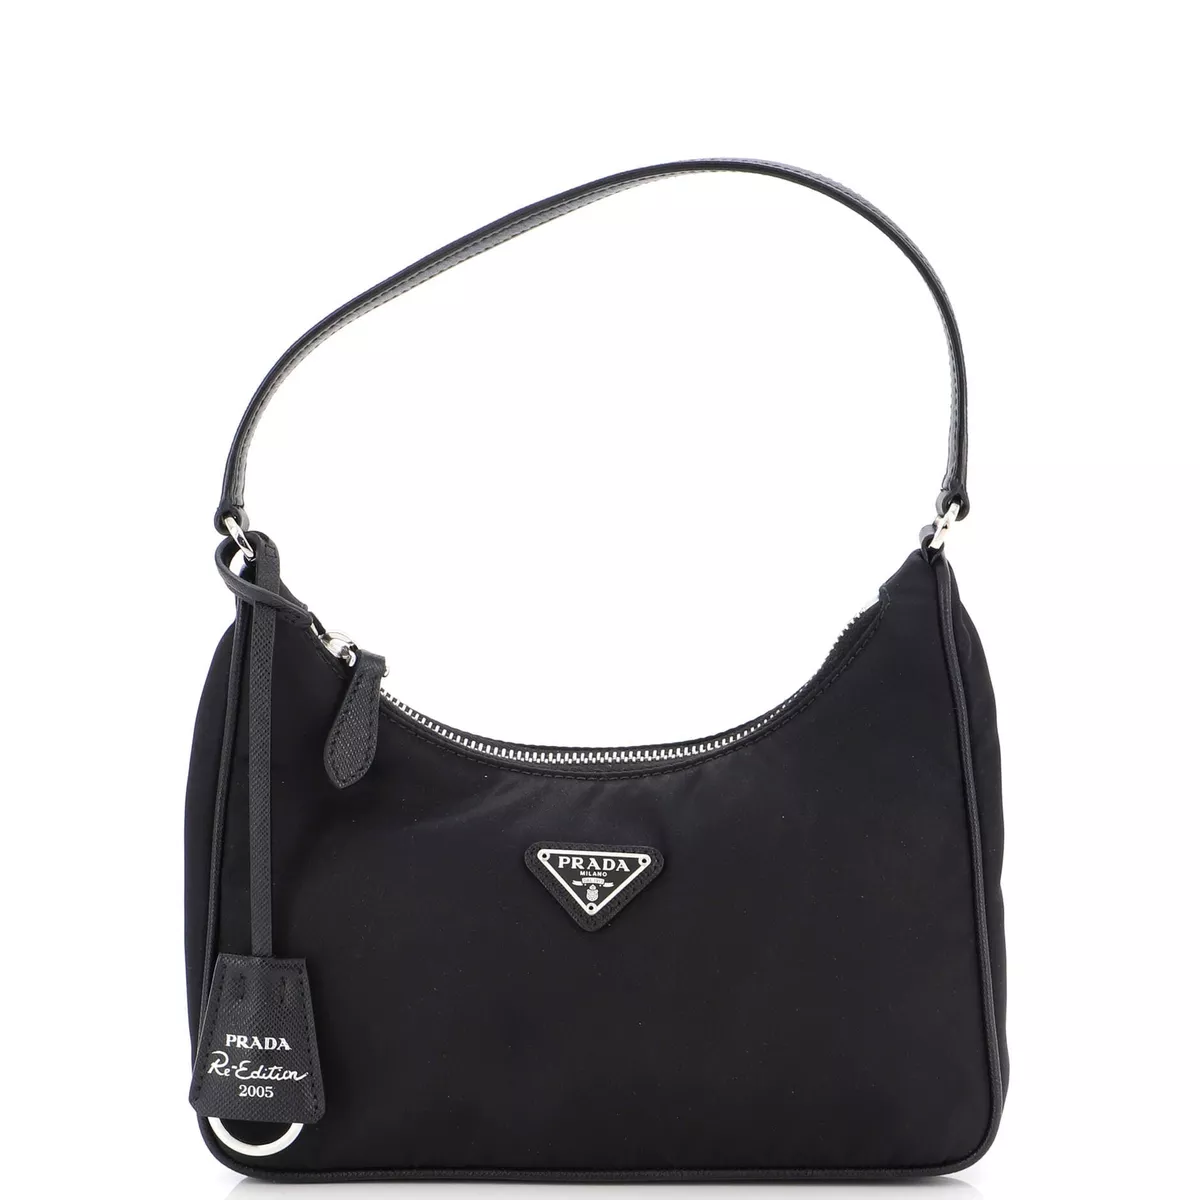 Should You Buy? Prada Re-Edition 2005 Saffiano Leather Bag 